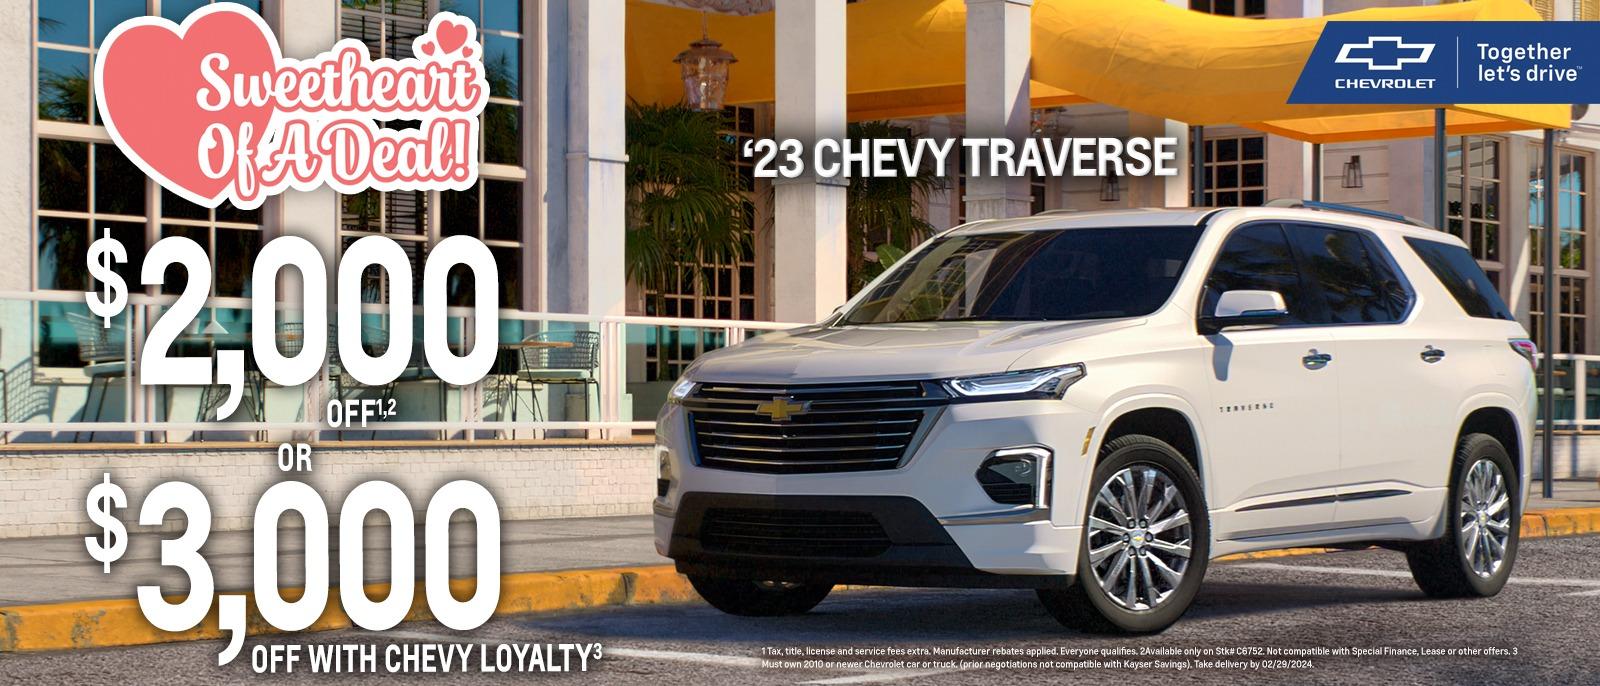 2023 Chevrolet Traverse
$1,000 Customer Cash